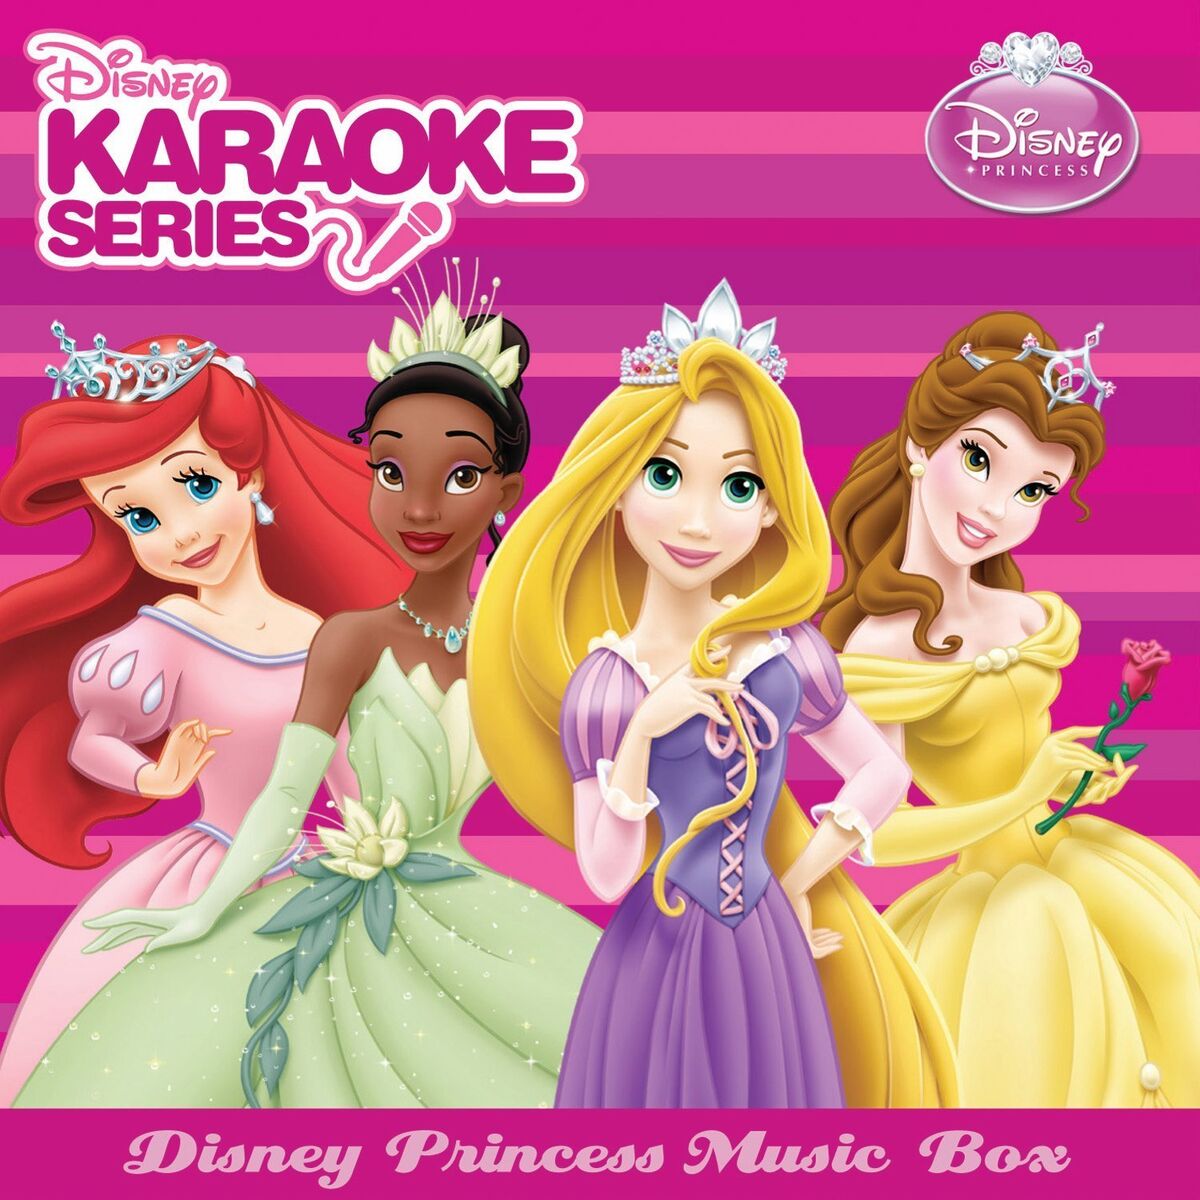 Disney's Princess Collection CD Album by Walt Disney Records (CD, 1995,  Disney)